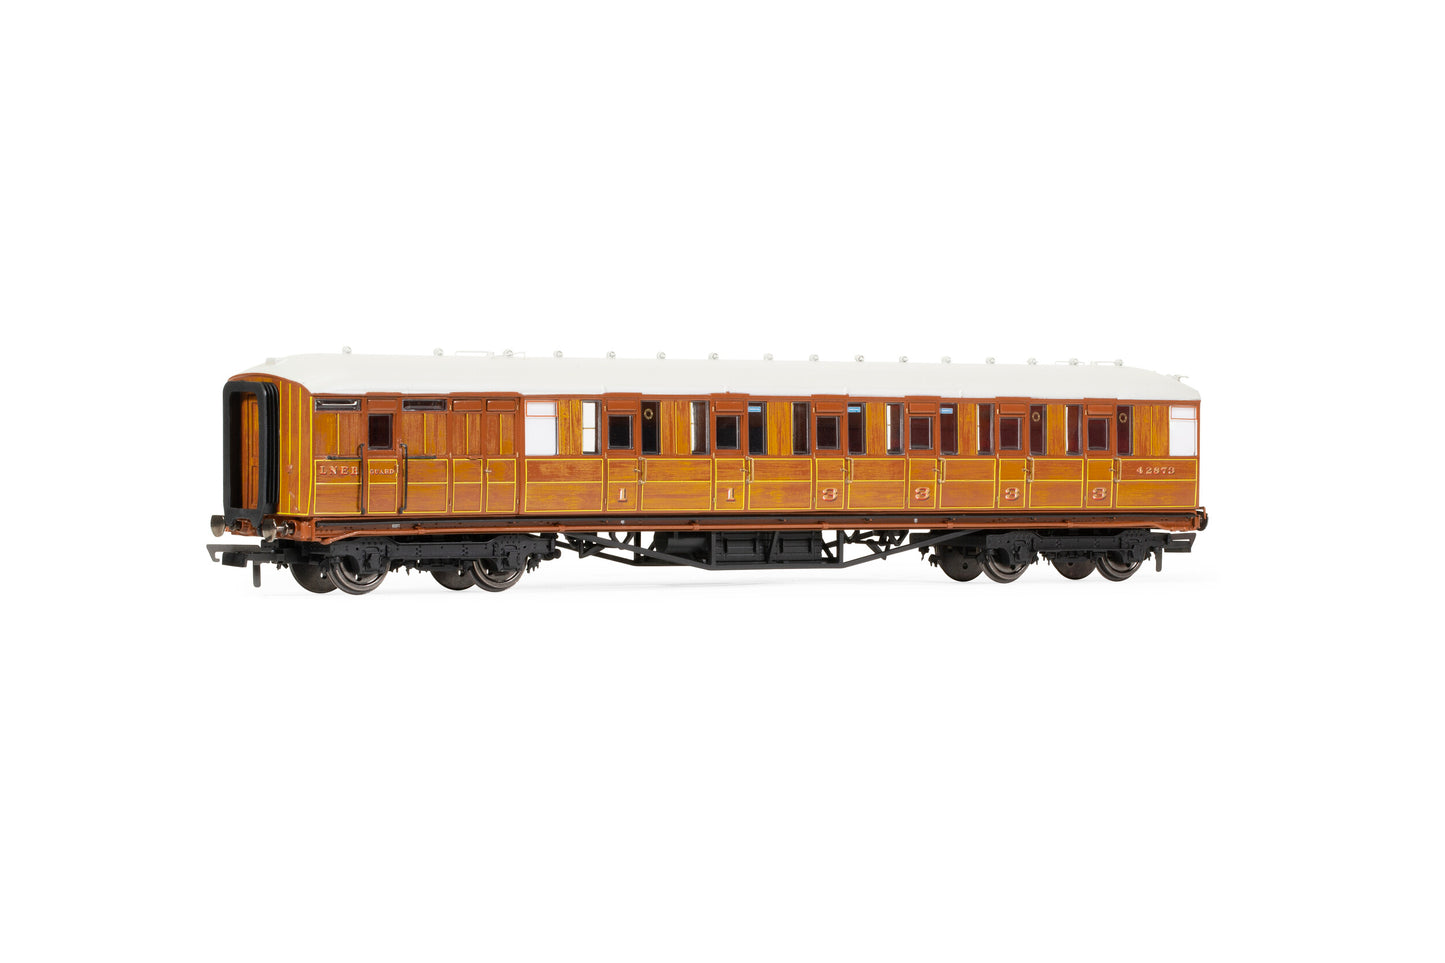 Hornby R4826A - LNER 61ft 6in Gresley Corridor Composite Coach '42873'